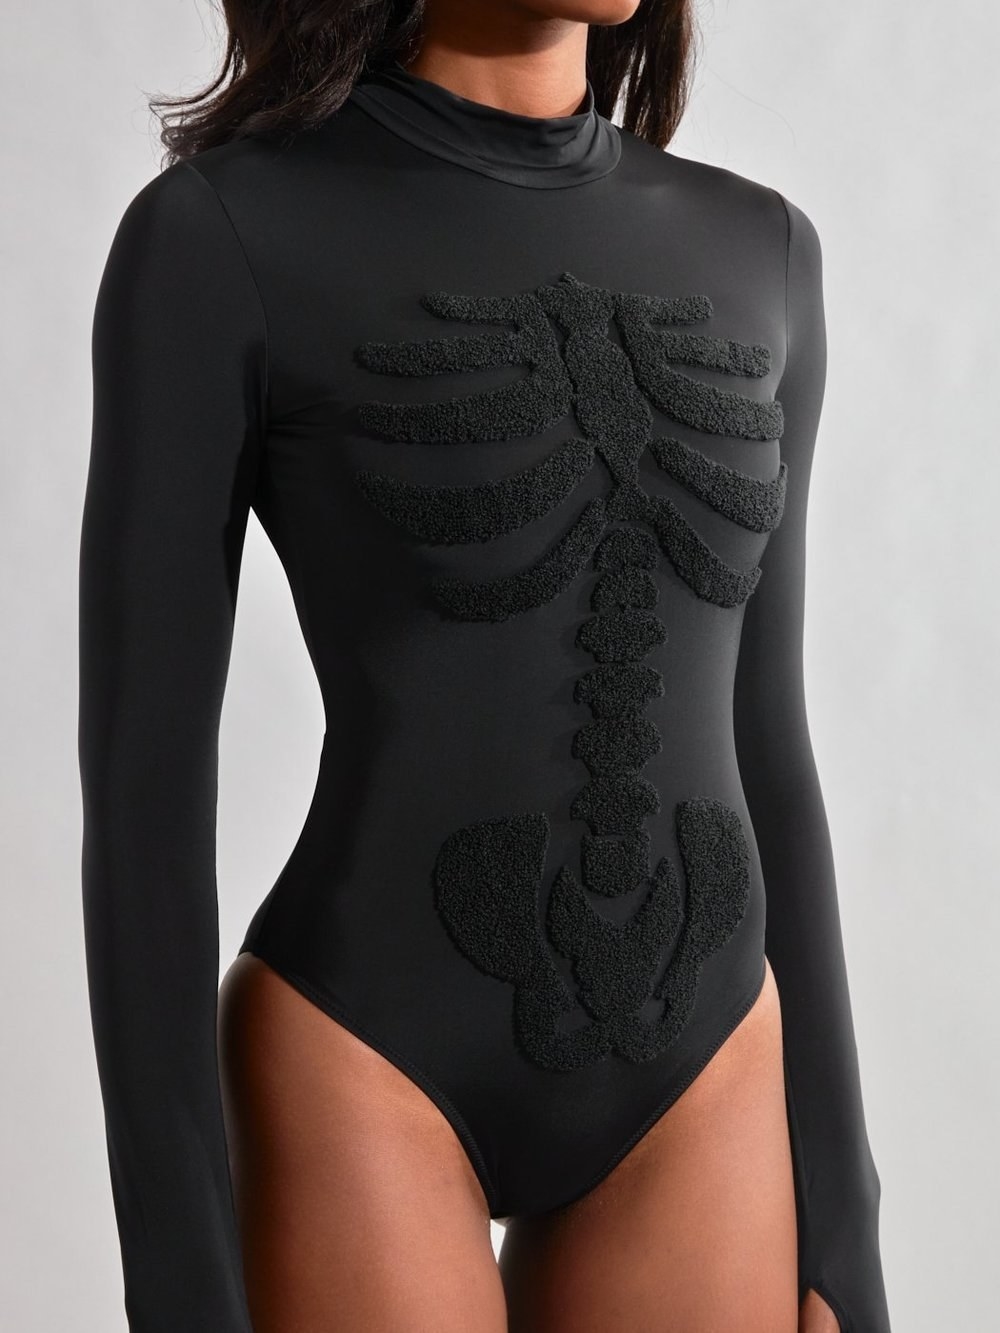 A model in the black mockneck bodysuit